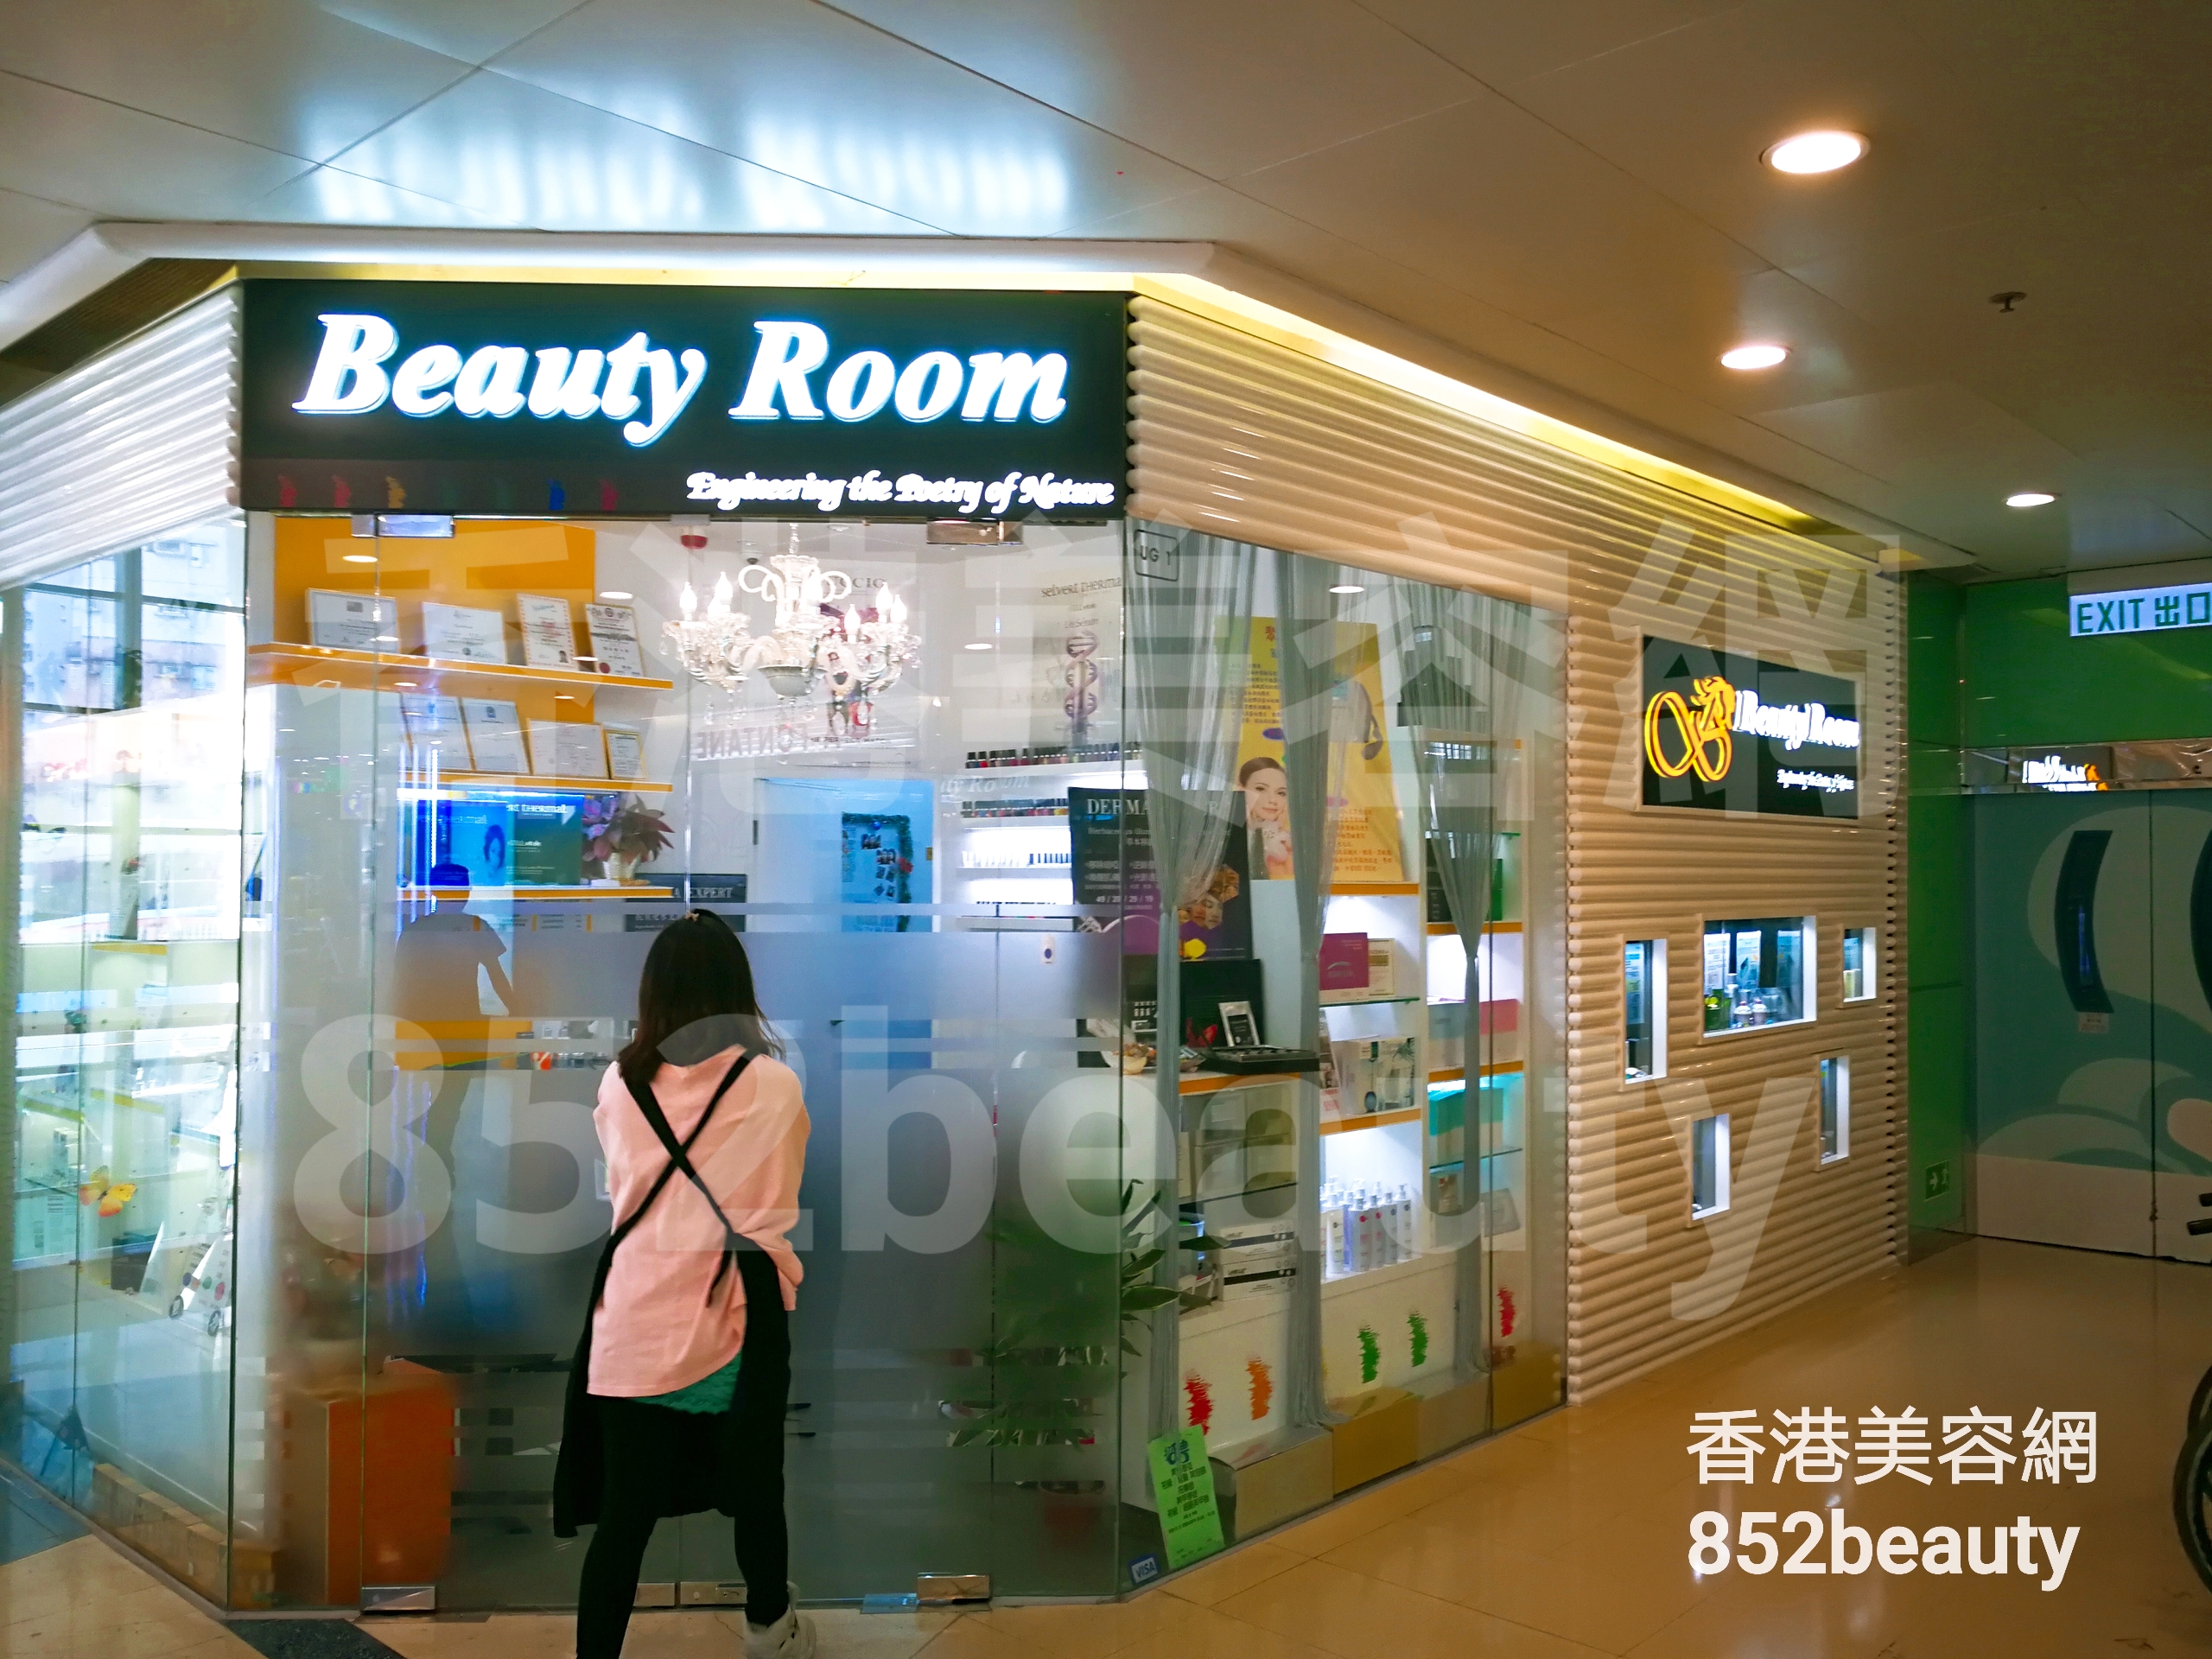 Facial Care: Beauty Room